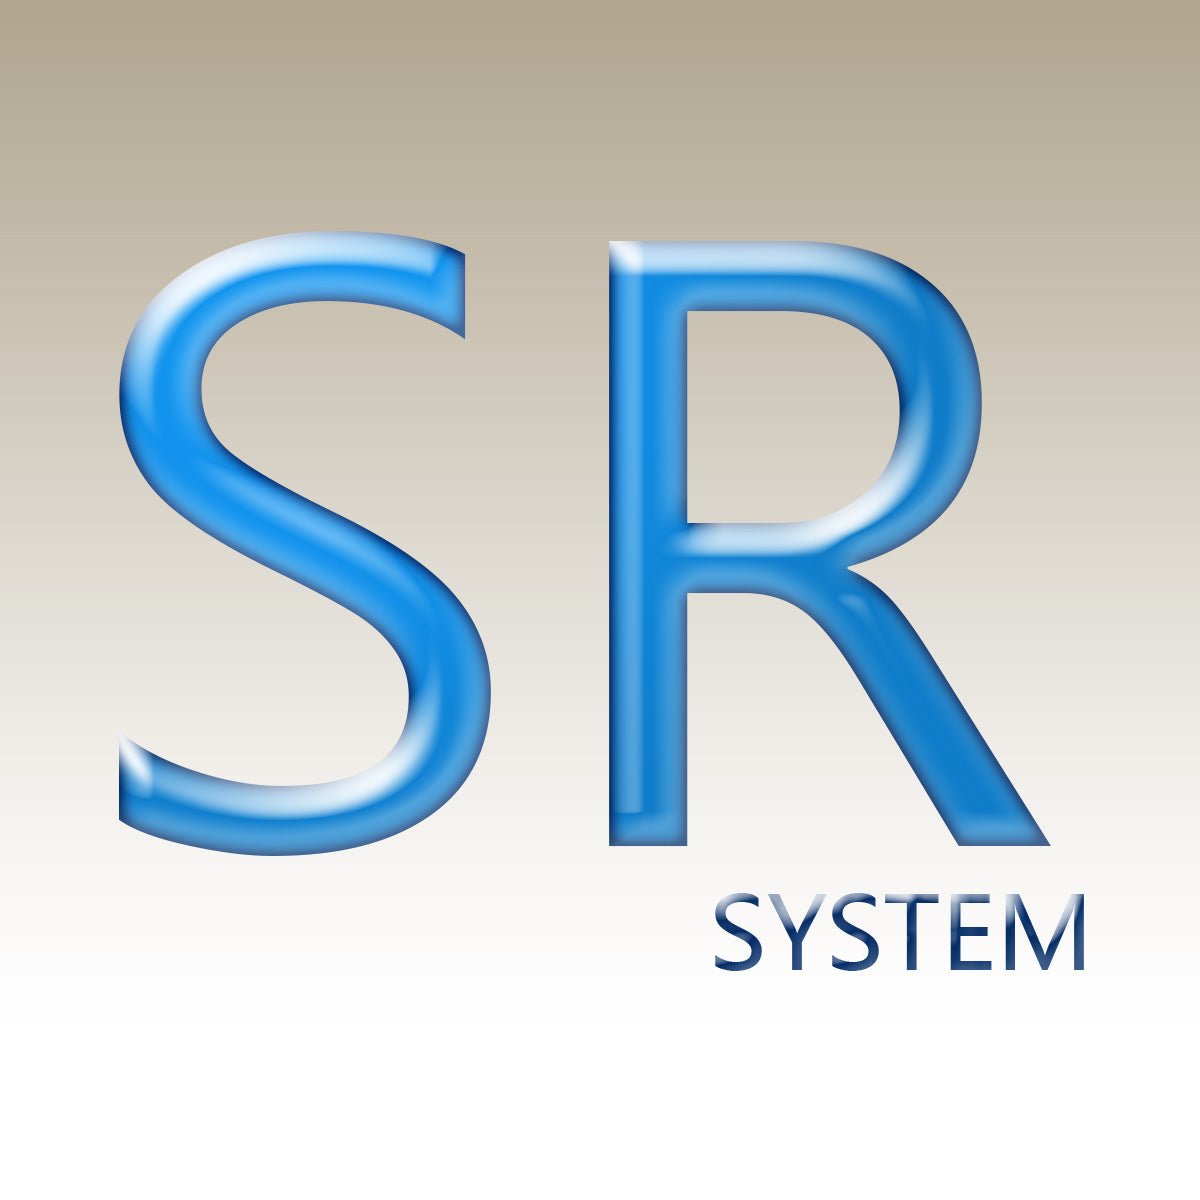 SR System